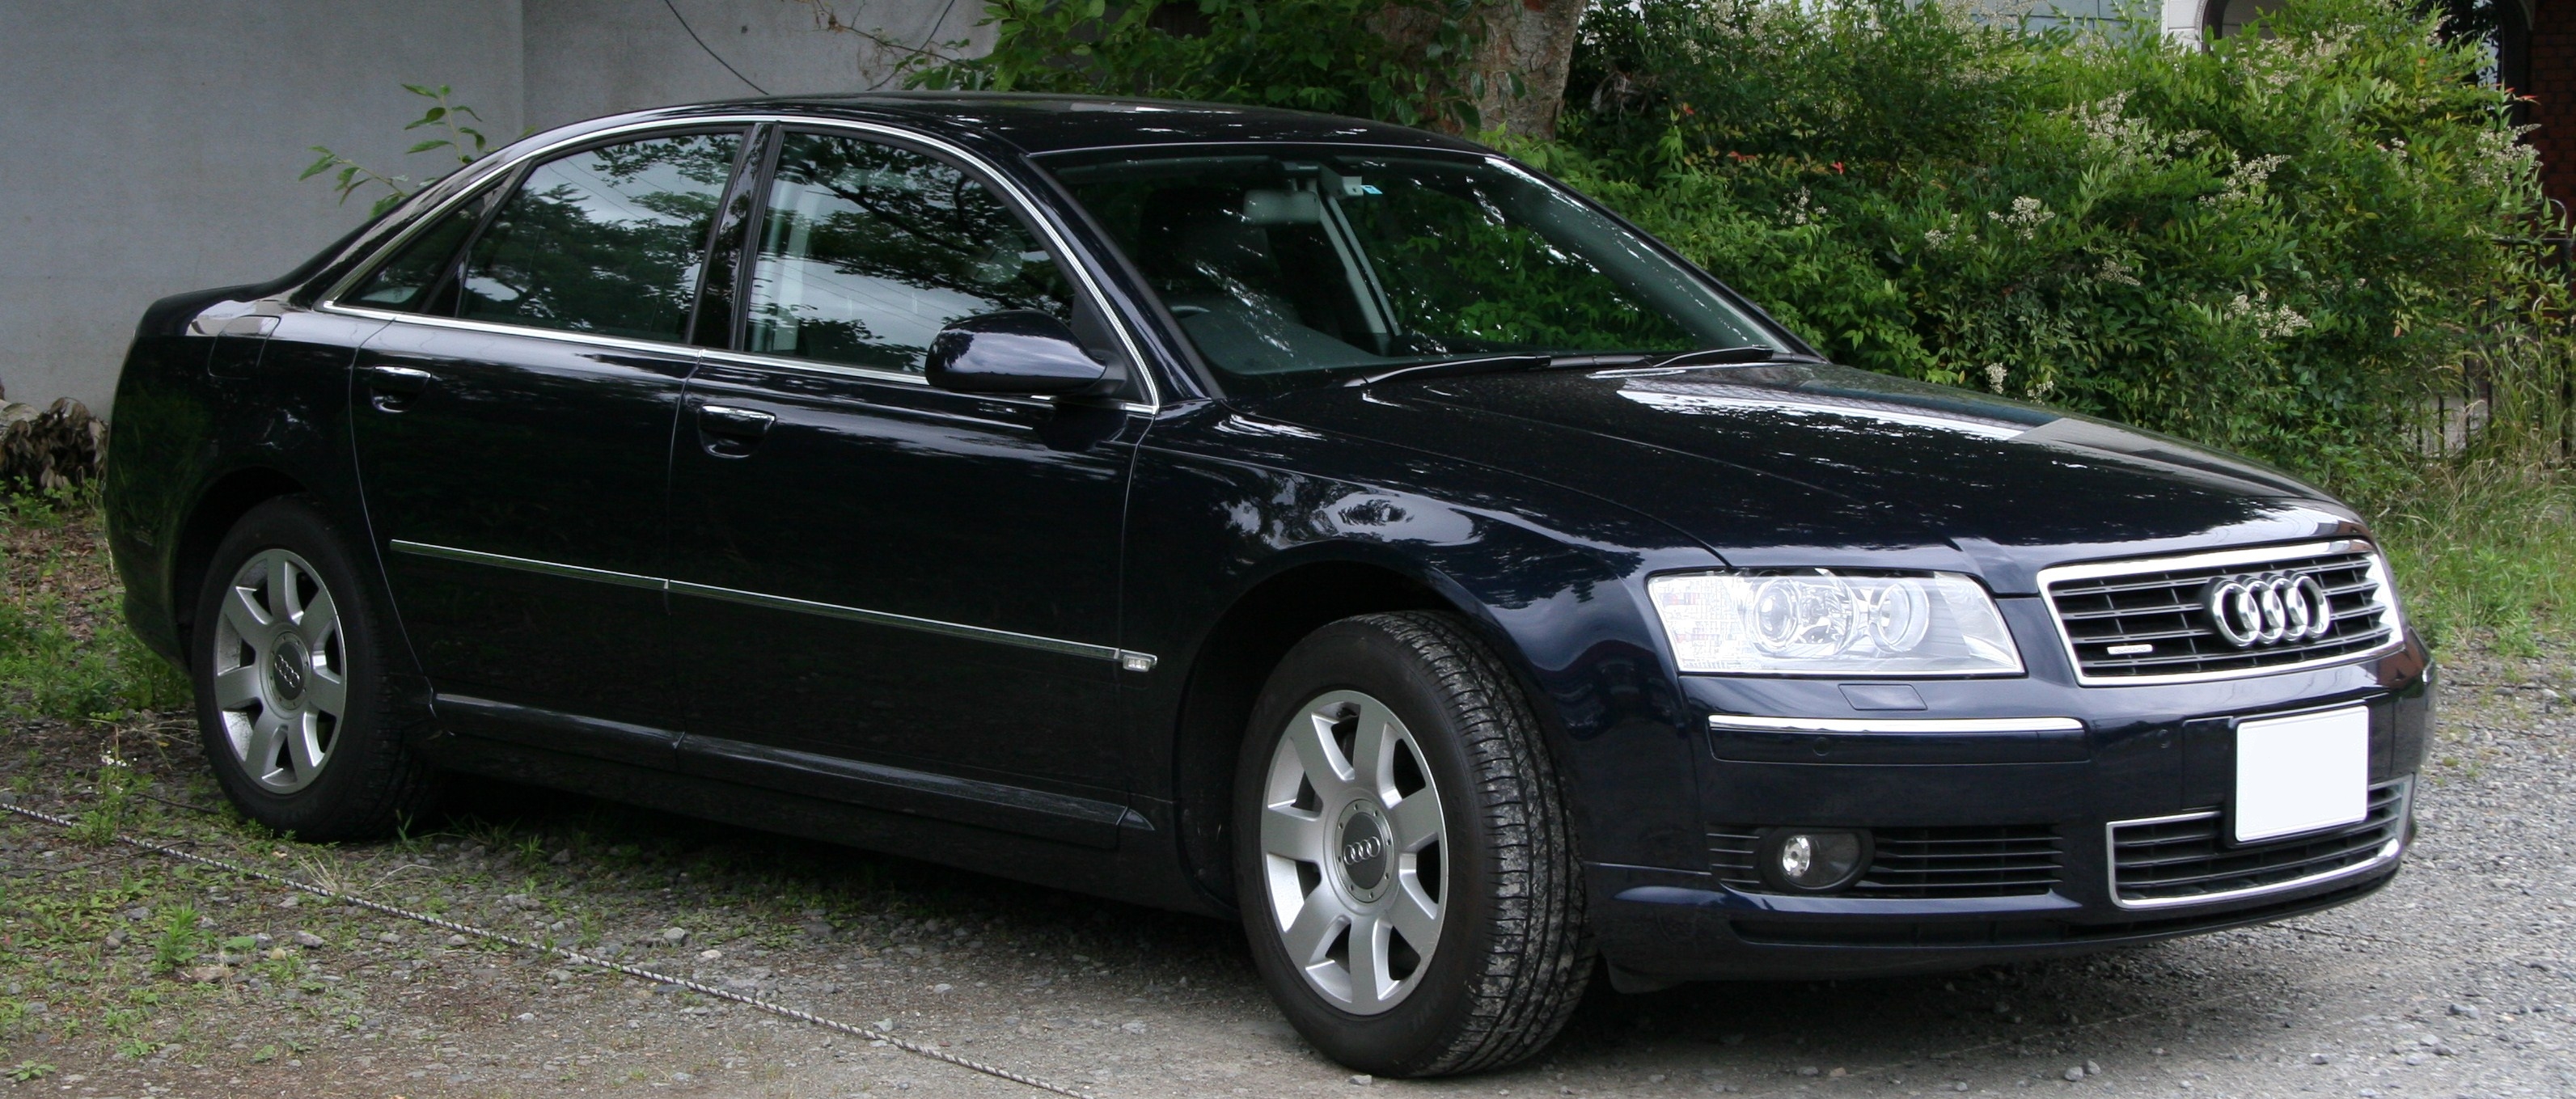 File:2003-2005 Audi A8 4.2 Quattro.jpg - Wikimedia Commons